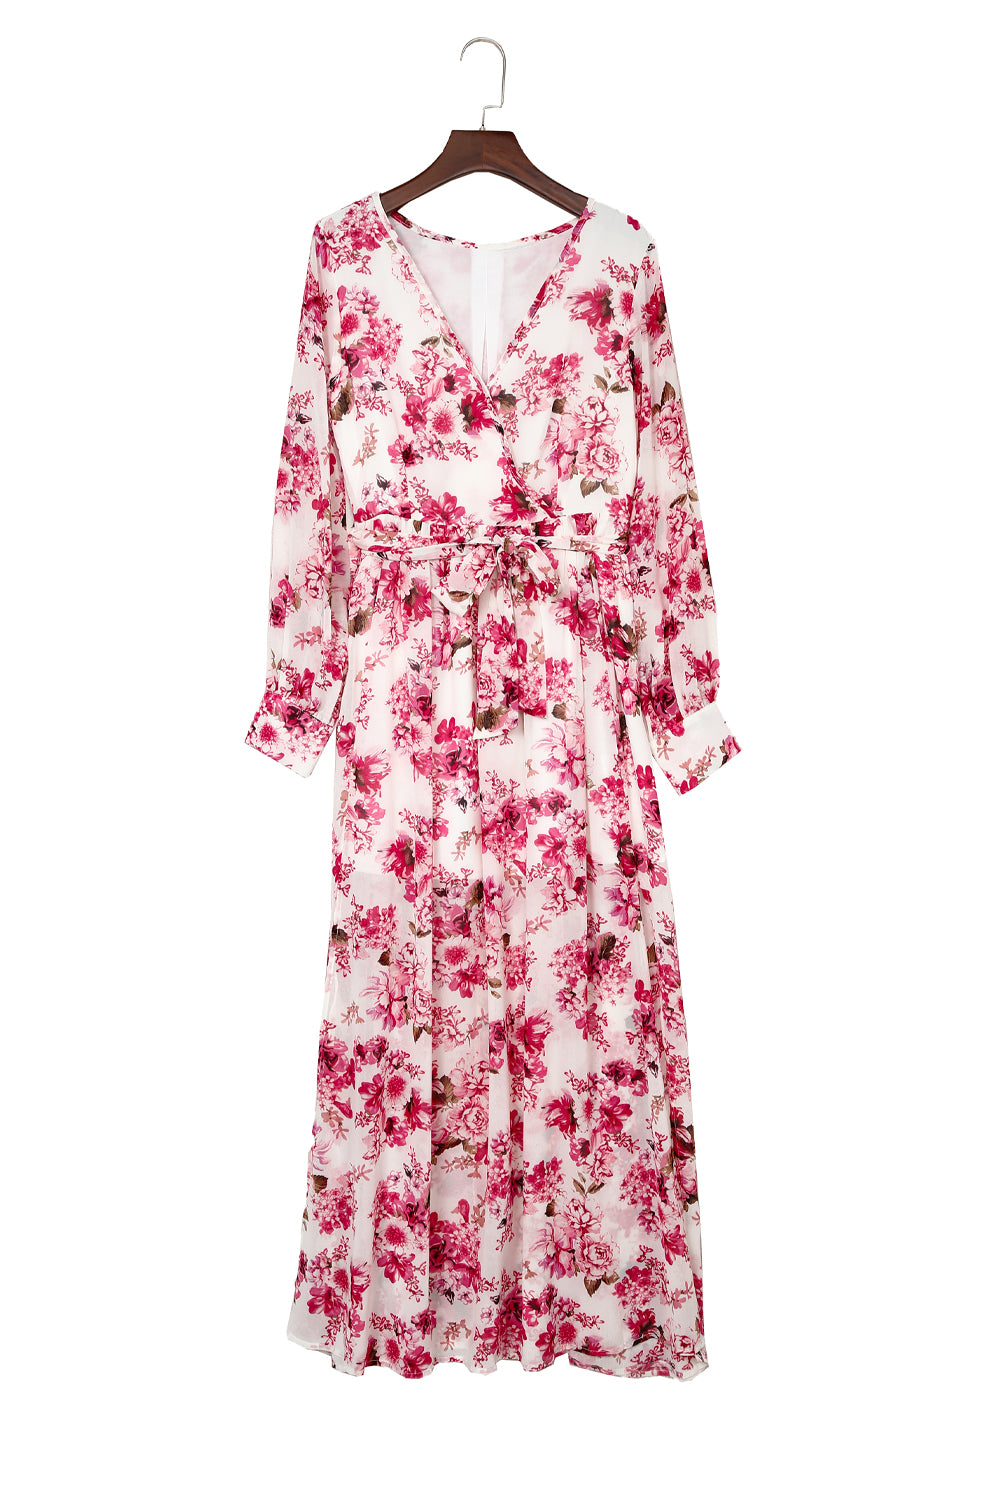 LC6111091-10-S, LC6111091-10-M, LC6111091-10-L, LC6111091-10-XL, Pink Women's Wrap V Neck Floral Long Sleeve Maxi Dress with Slit